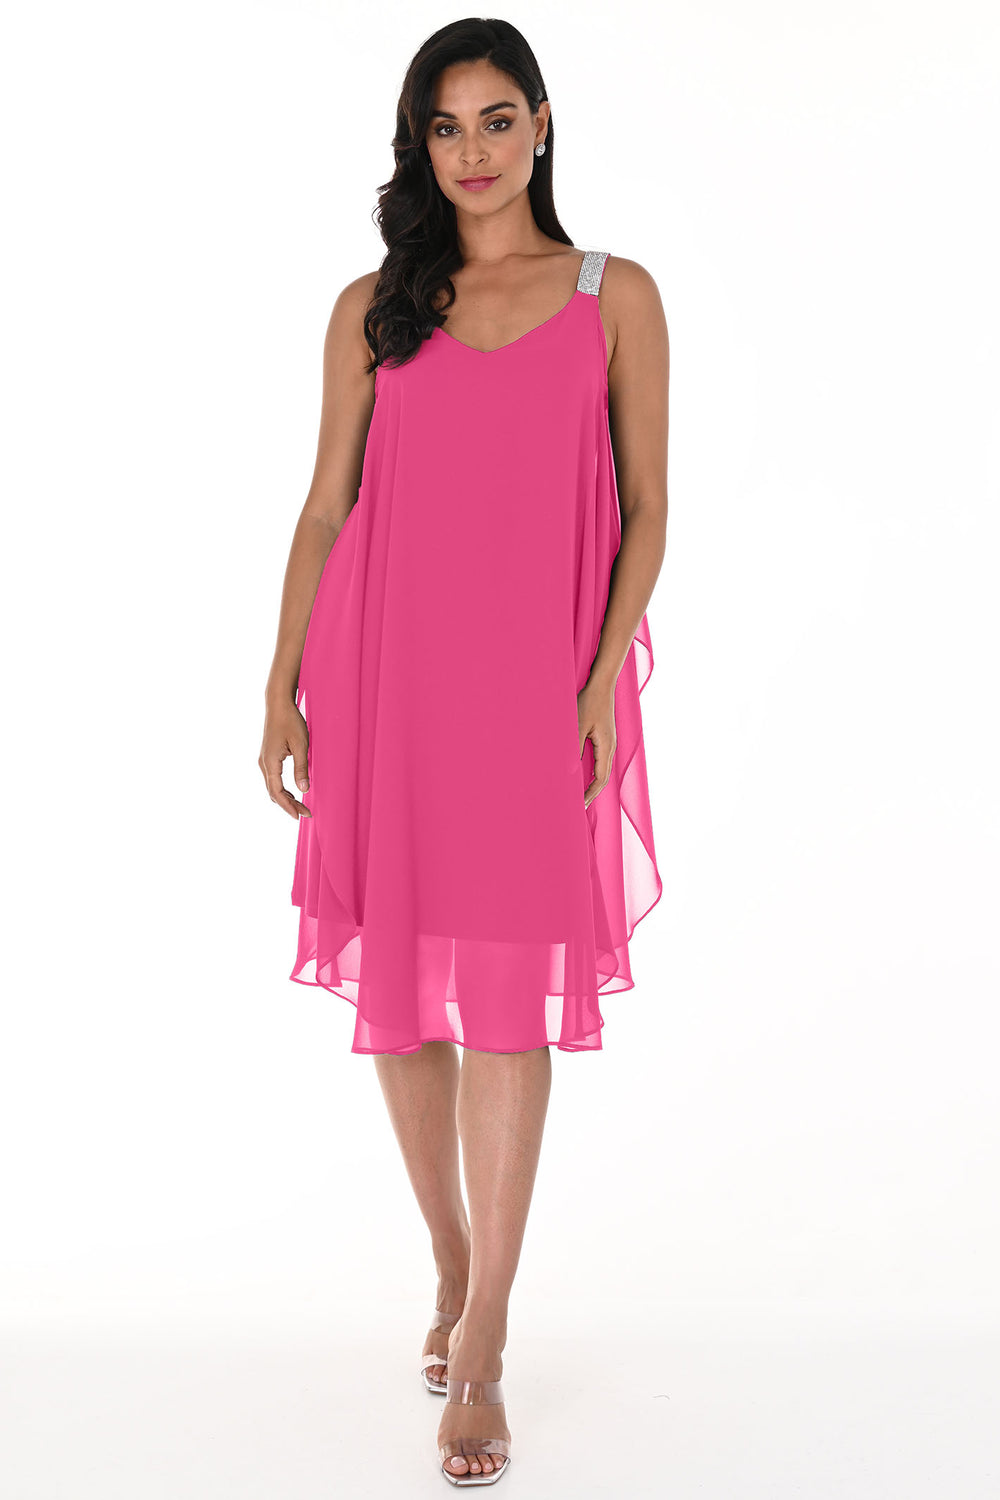 Frank Lyman 248001 Magenta Pink Chiffon Overlay Occasion Dress - Dotique